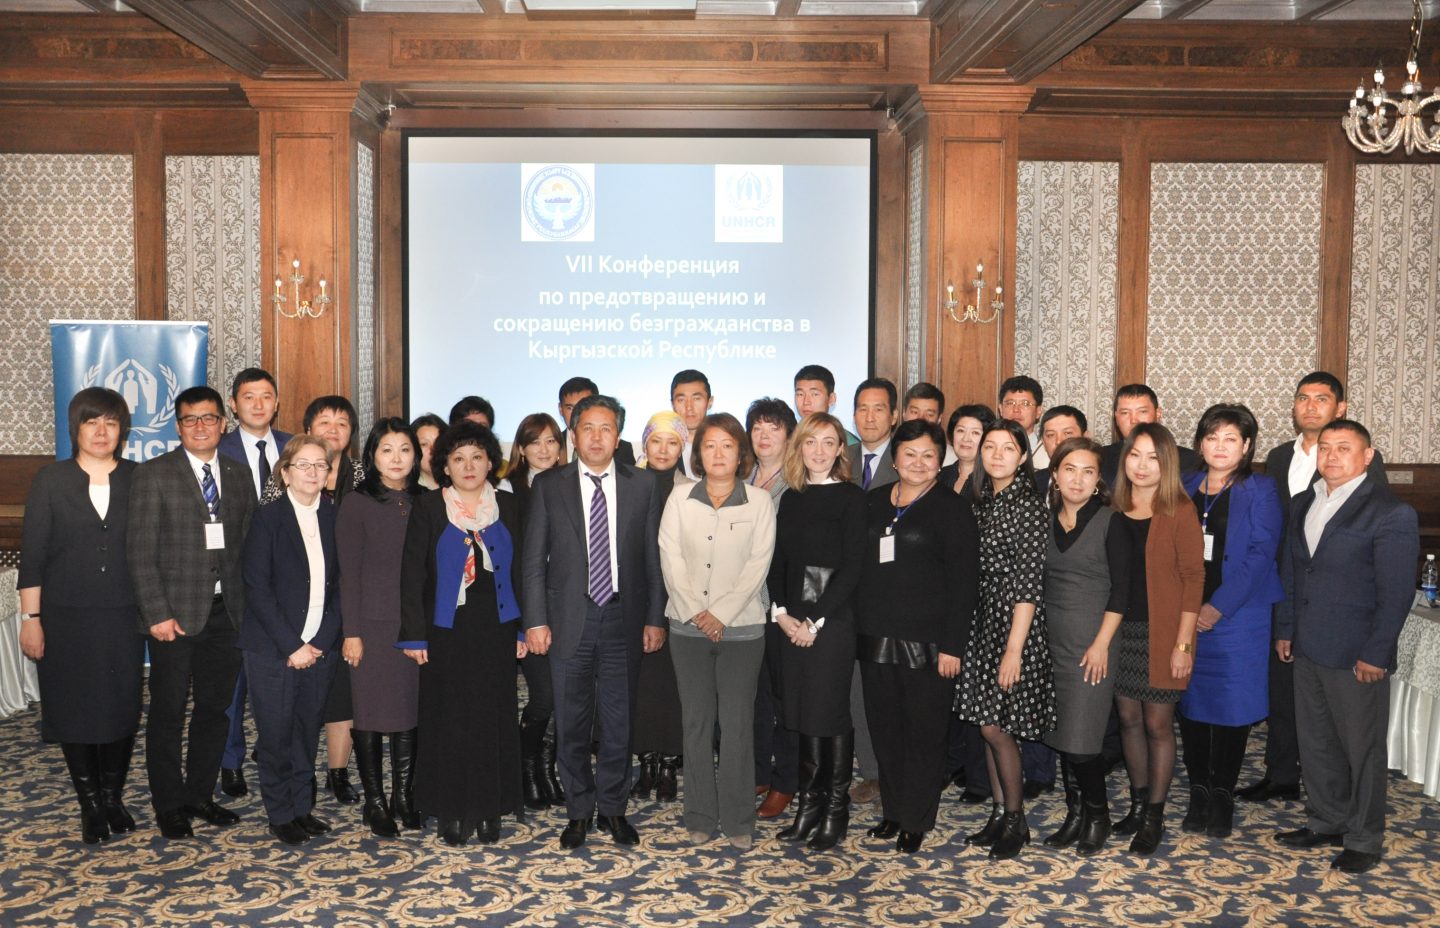 kyrgyzstan-meeting-participants